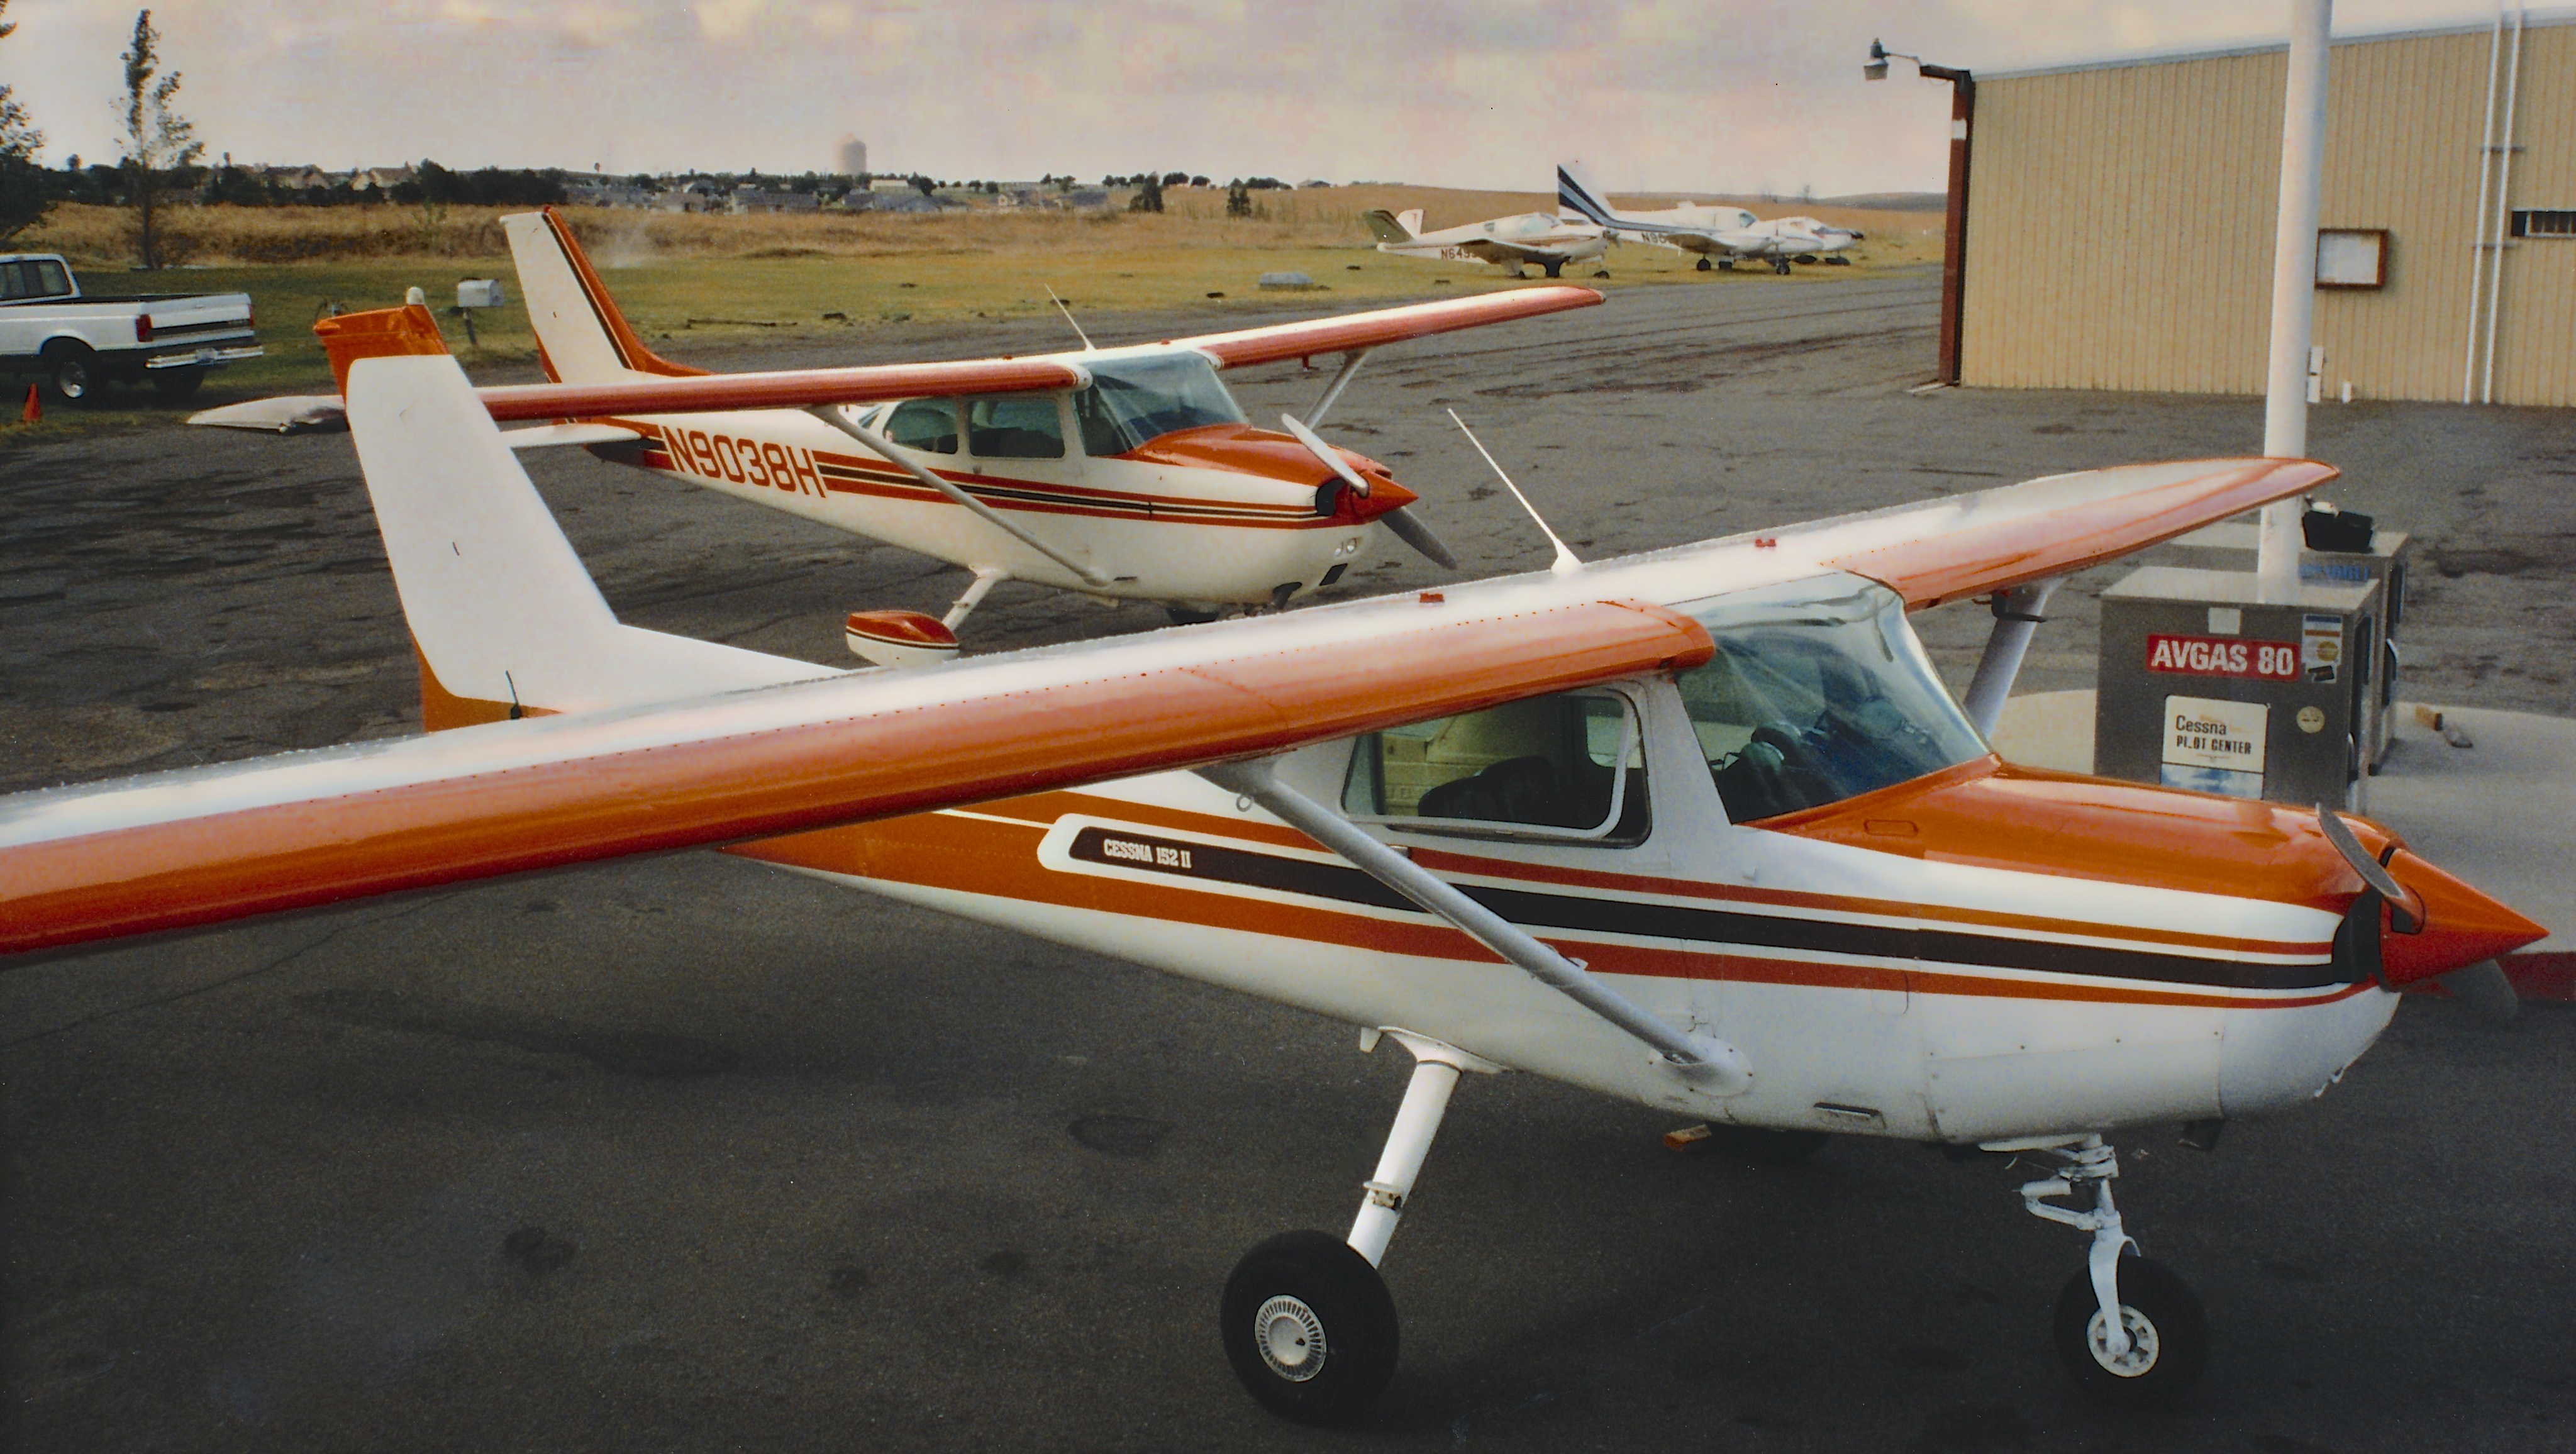 Cessna N4649l And N9038h